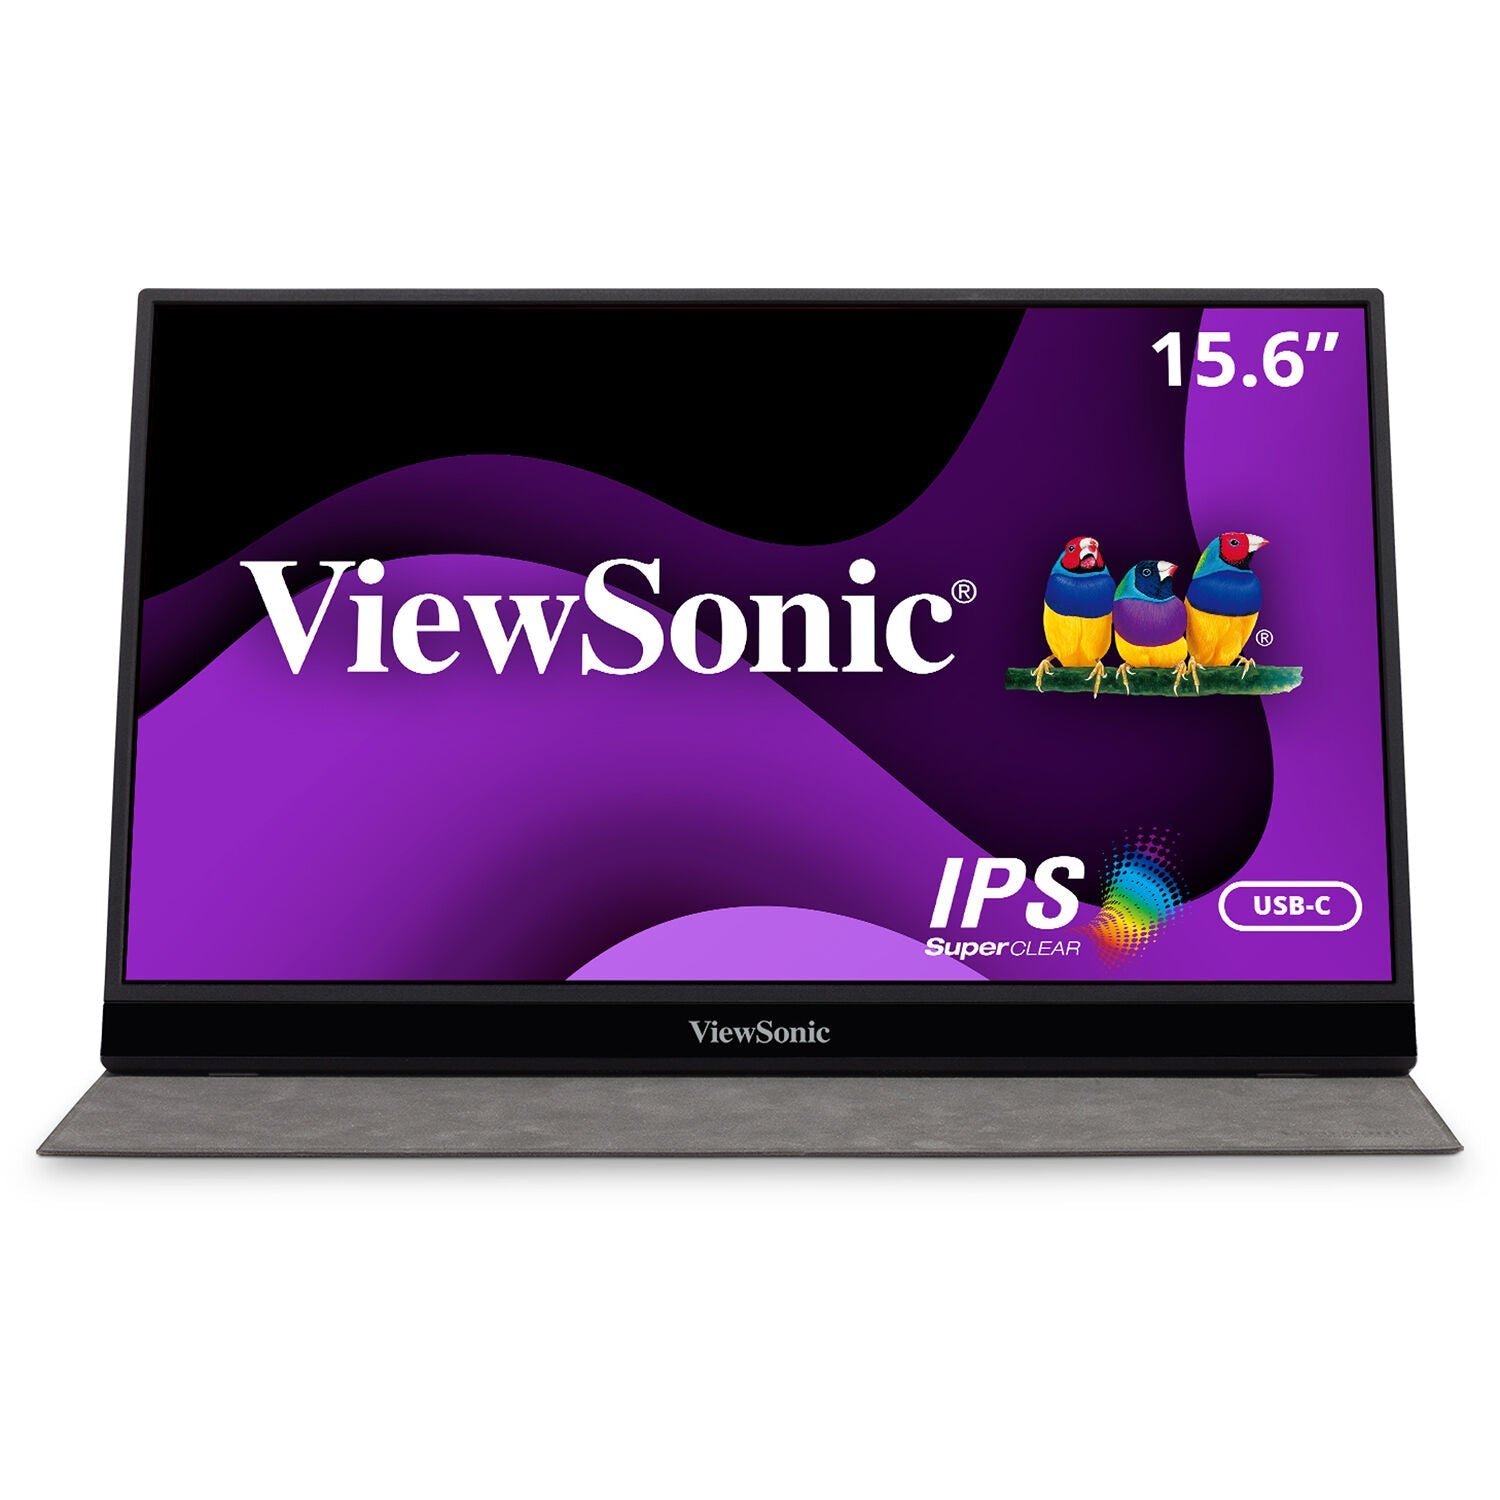 ViewSonic VG1655-S 15.6" 16:9 Portable IPS Monitor - Certified Refurbished